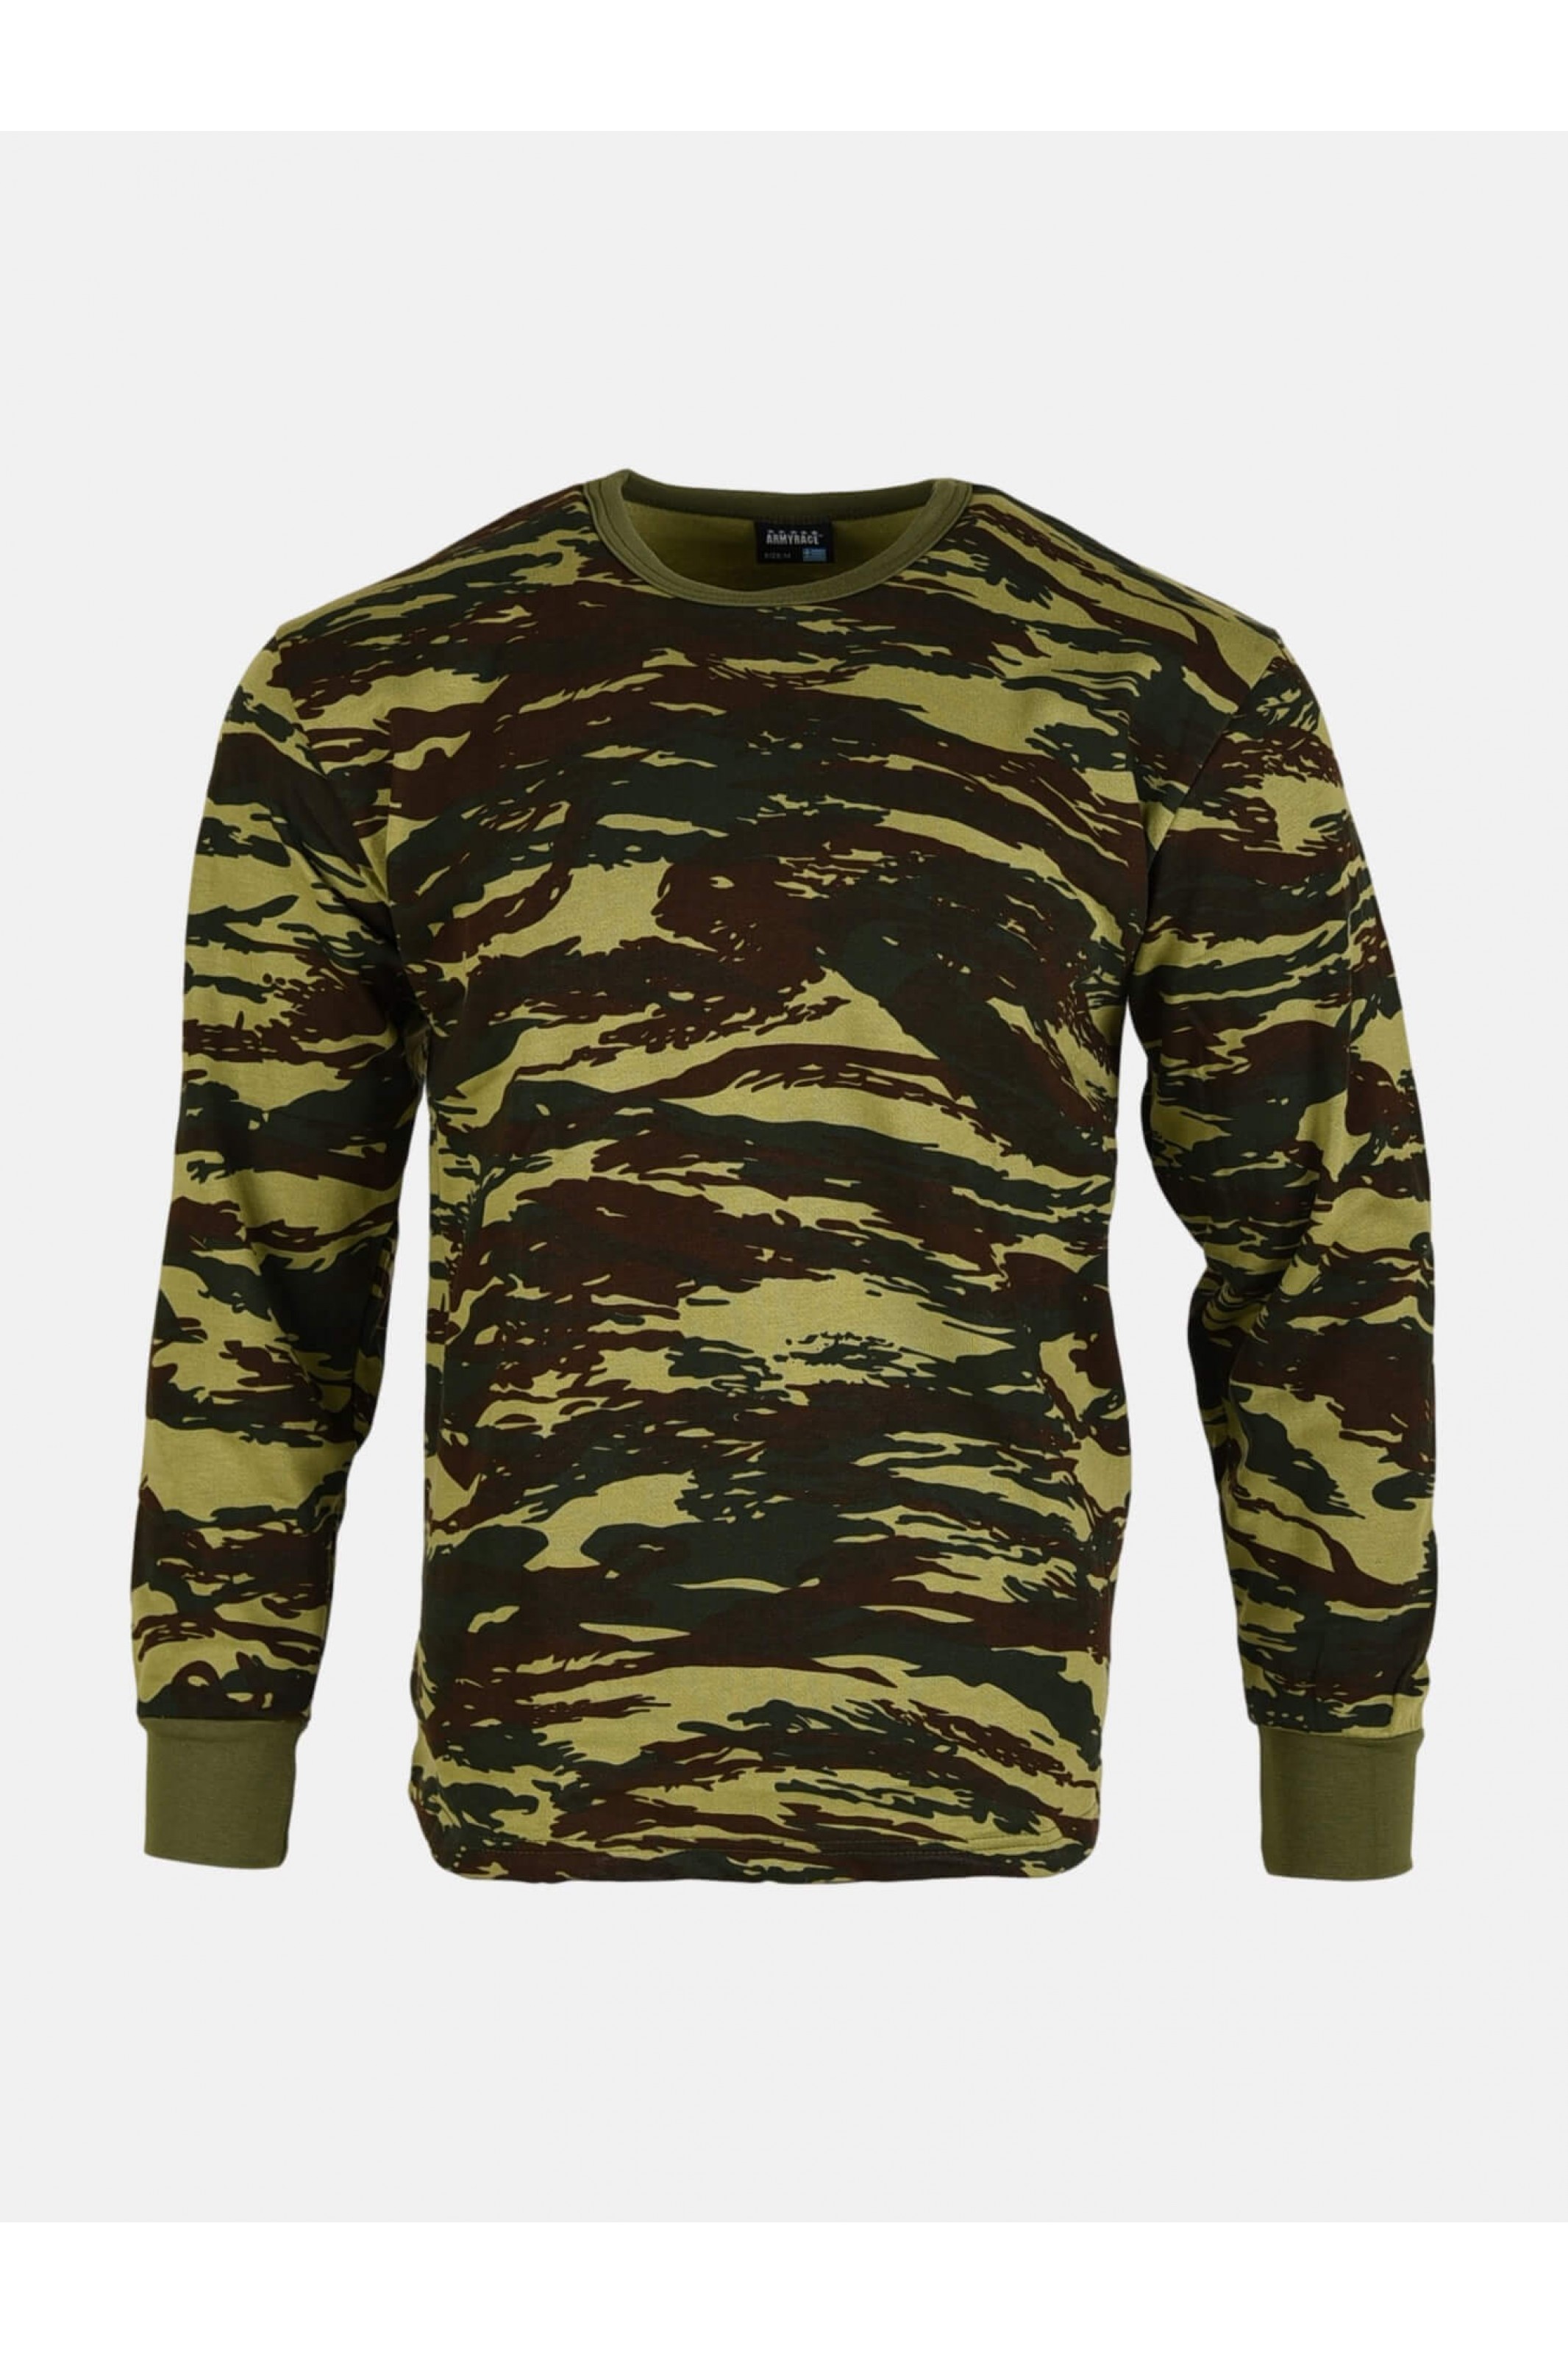 Greek camouflage sweatshirt ARMY RACE - MoutakisWorld.com